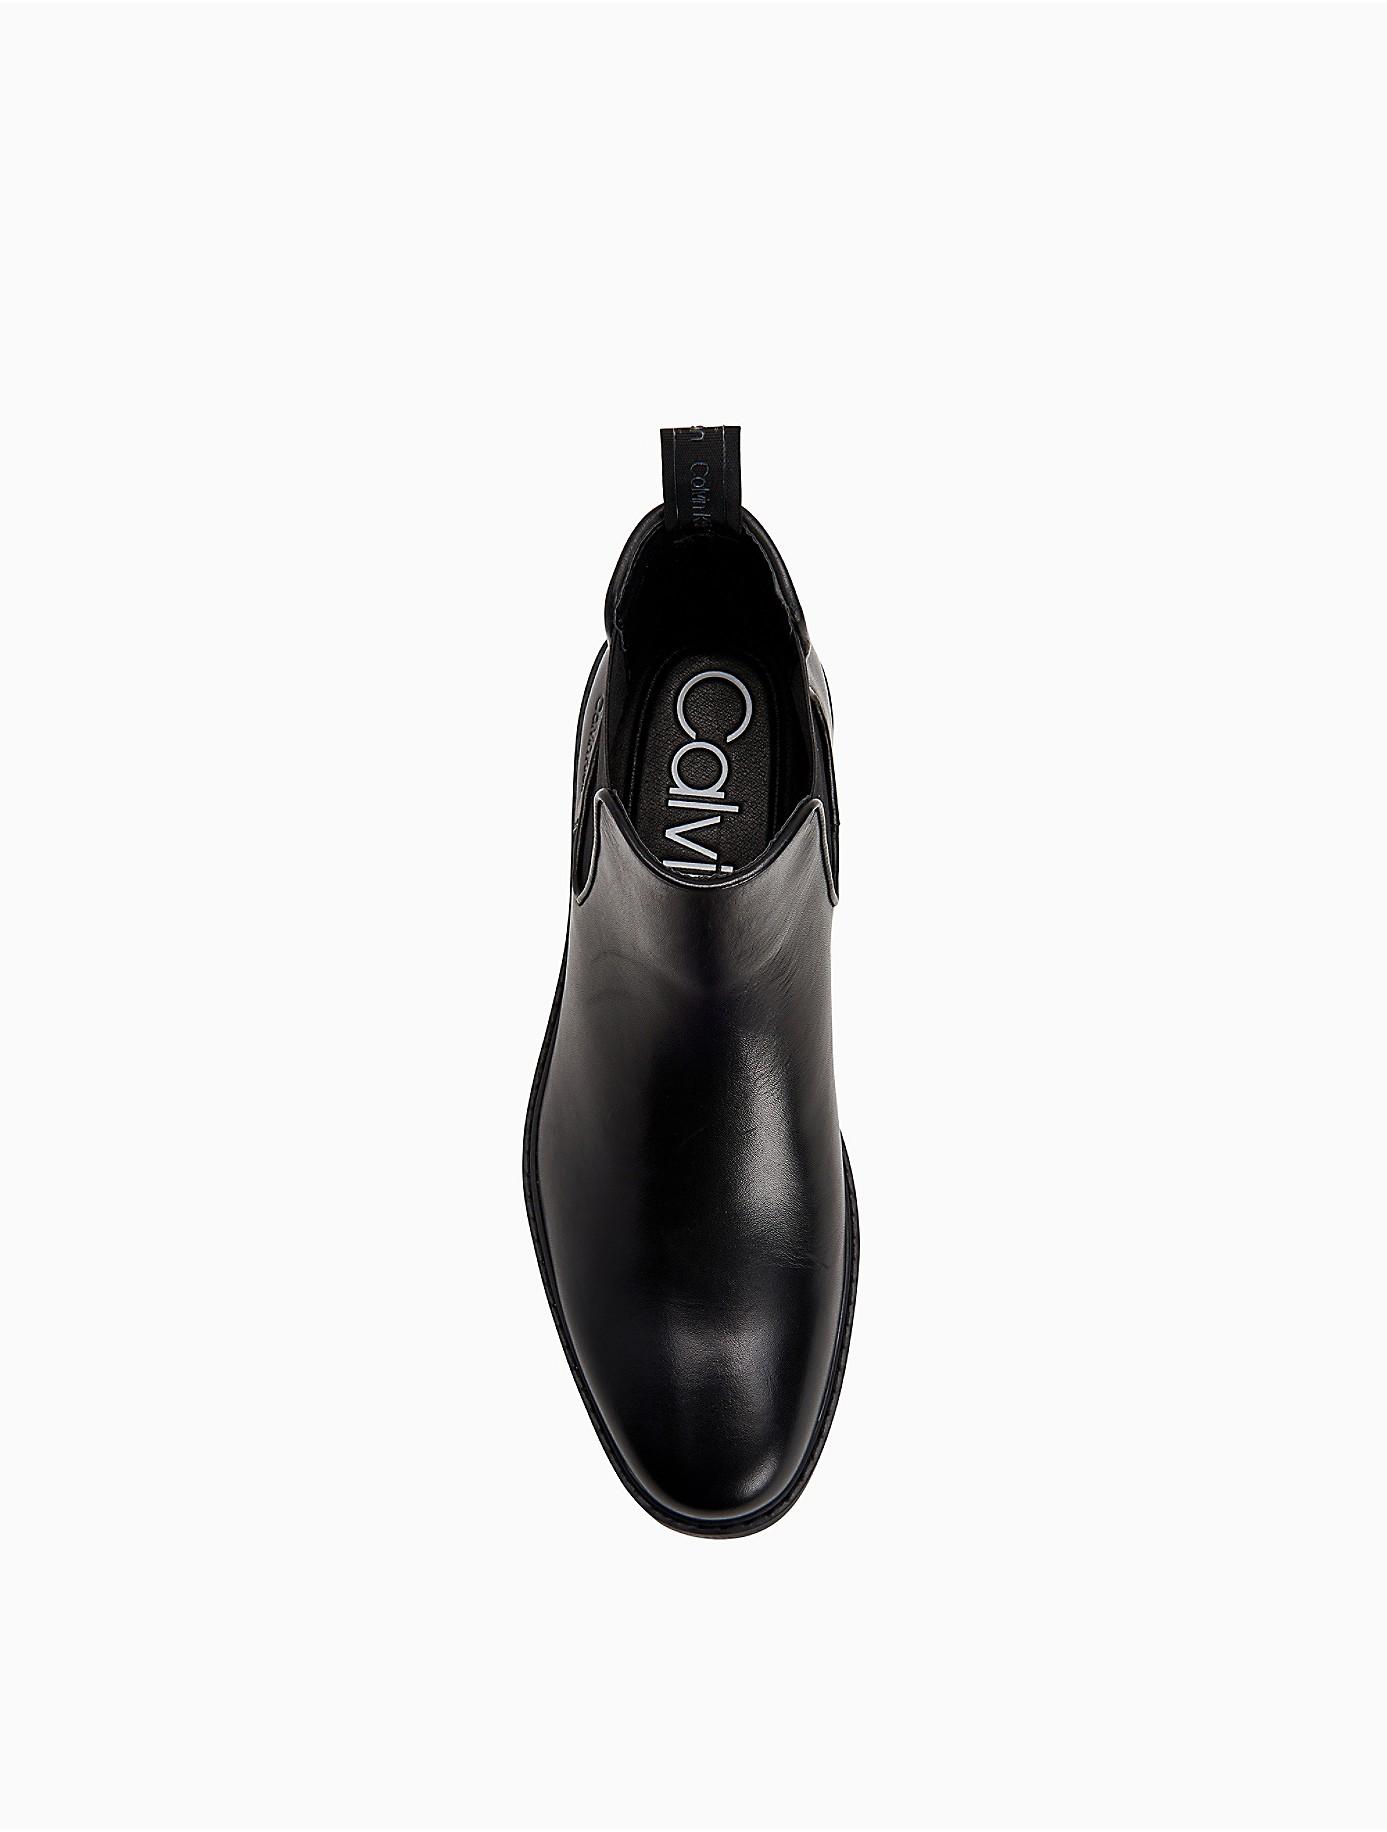 Calvin Klein Fenwick Leather Chelsea Boot in Black for Men - Lyst